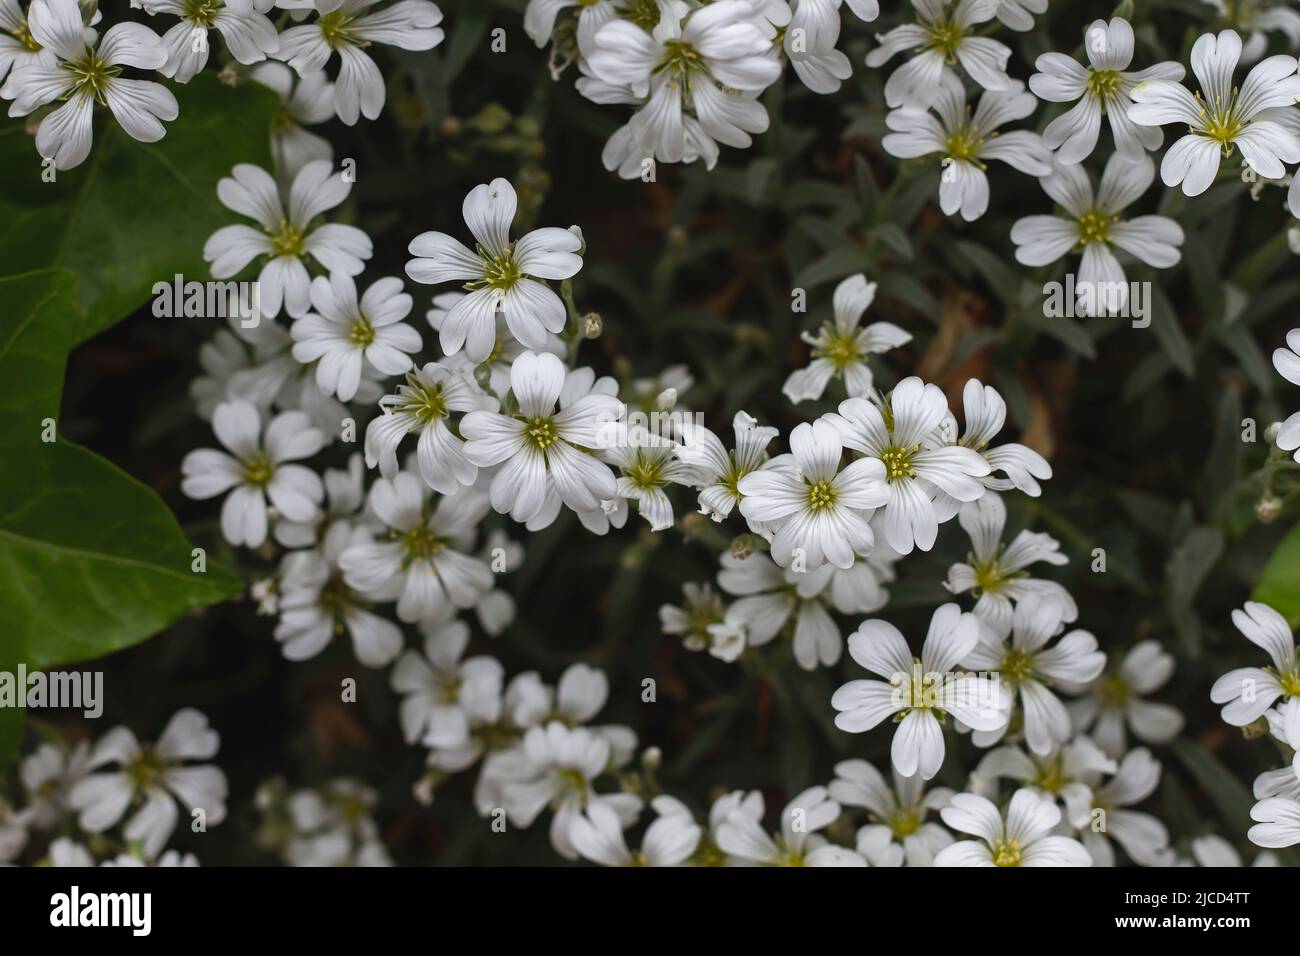 Cerastium tomentosum (snow in summer) ground cover plant white flowers Stock Photo